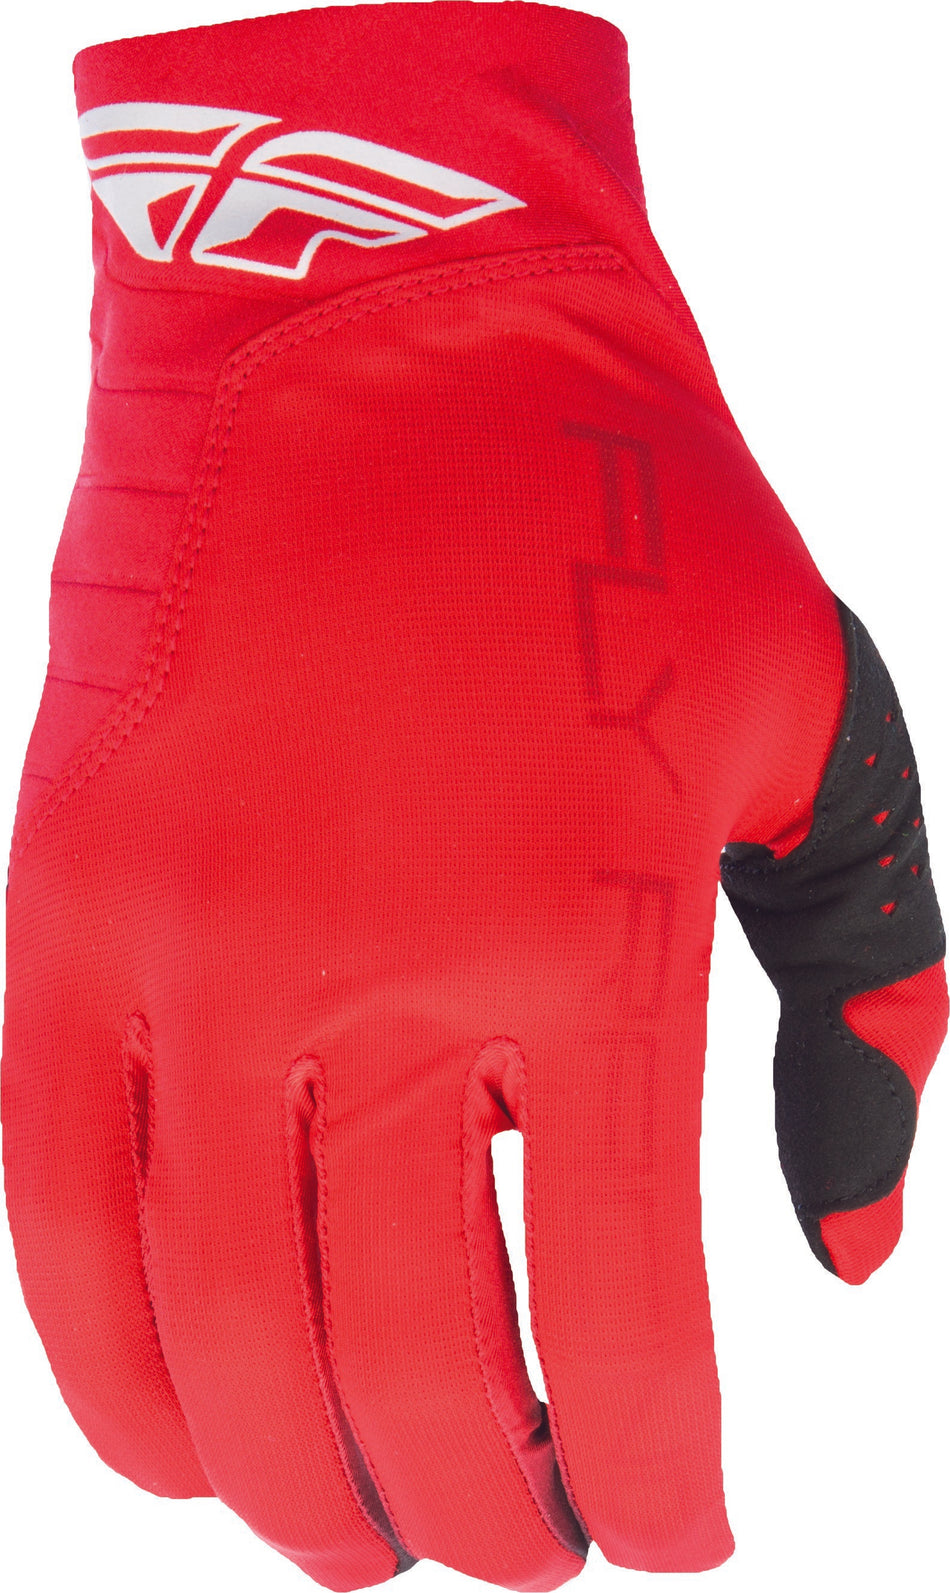 FLY RACING Pro Lite Glove Red Sz 12 2x 370-81212